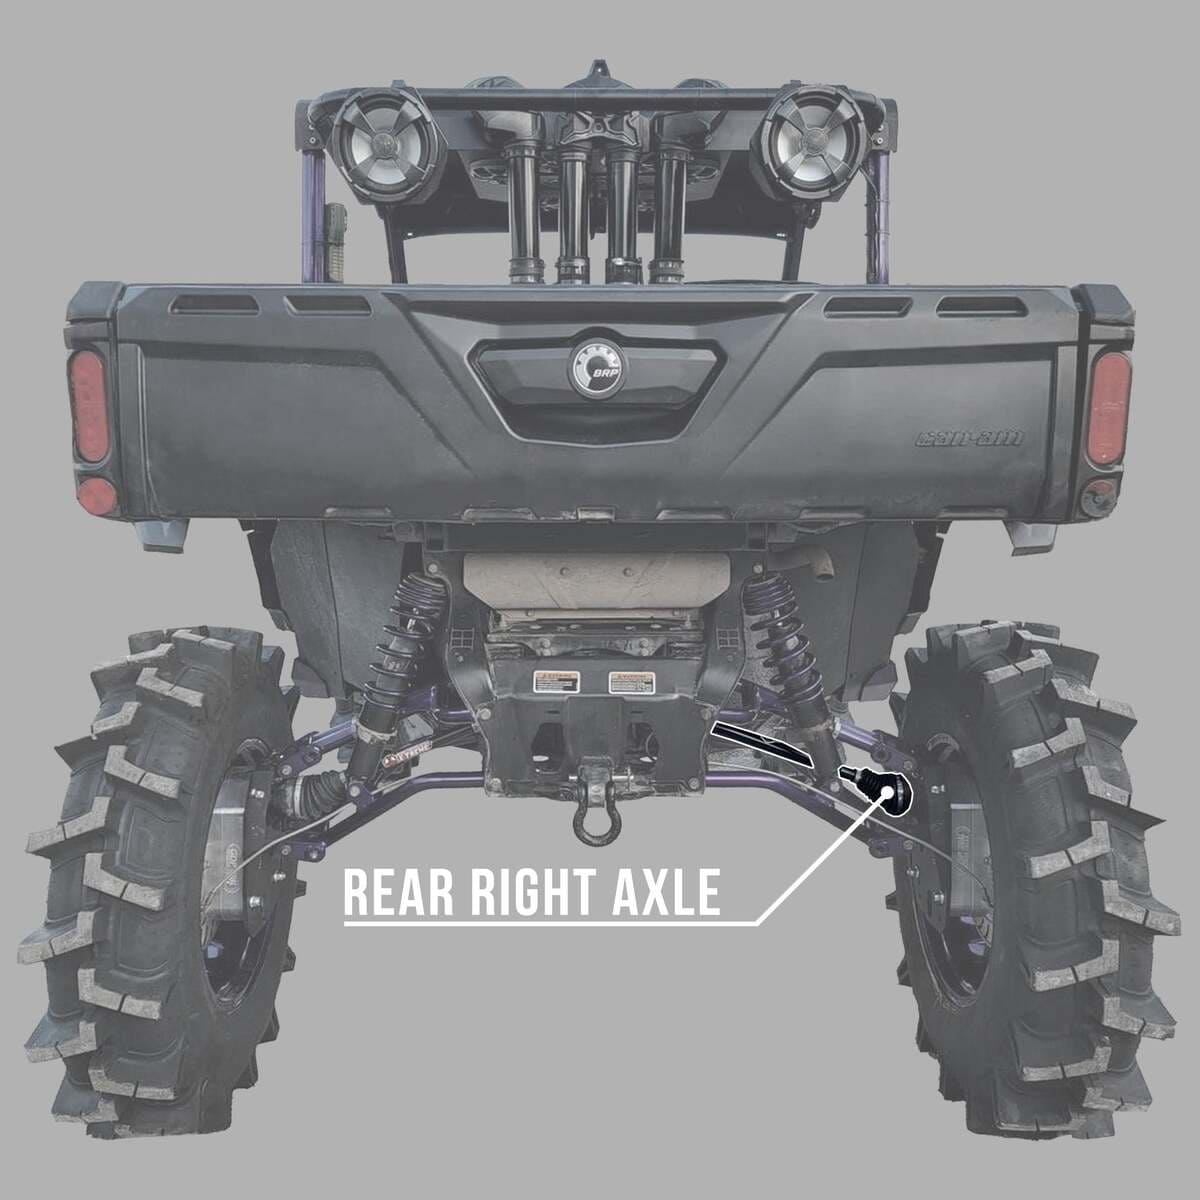 Demon Powersports '17 Polaris RZR 570 Demon Heavy Duty Lift Kit Axle